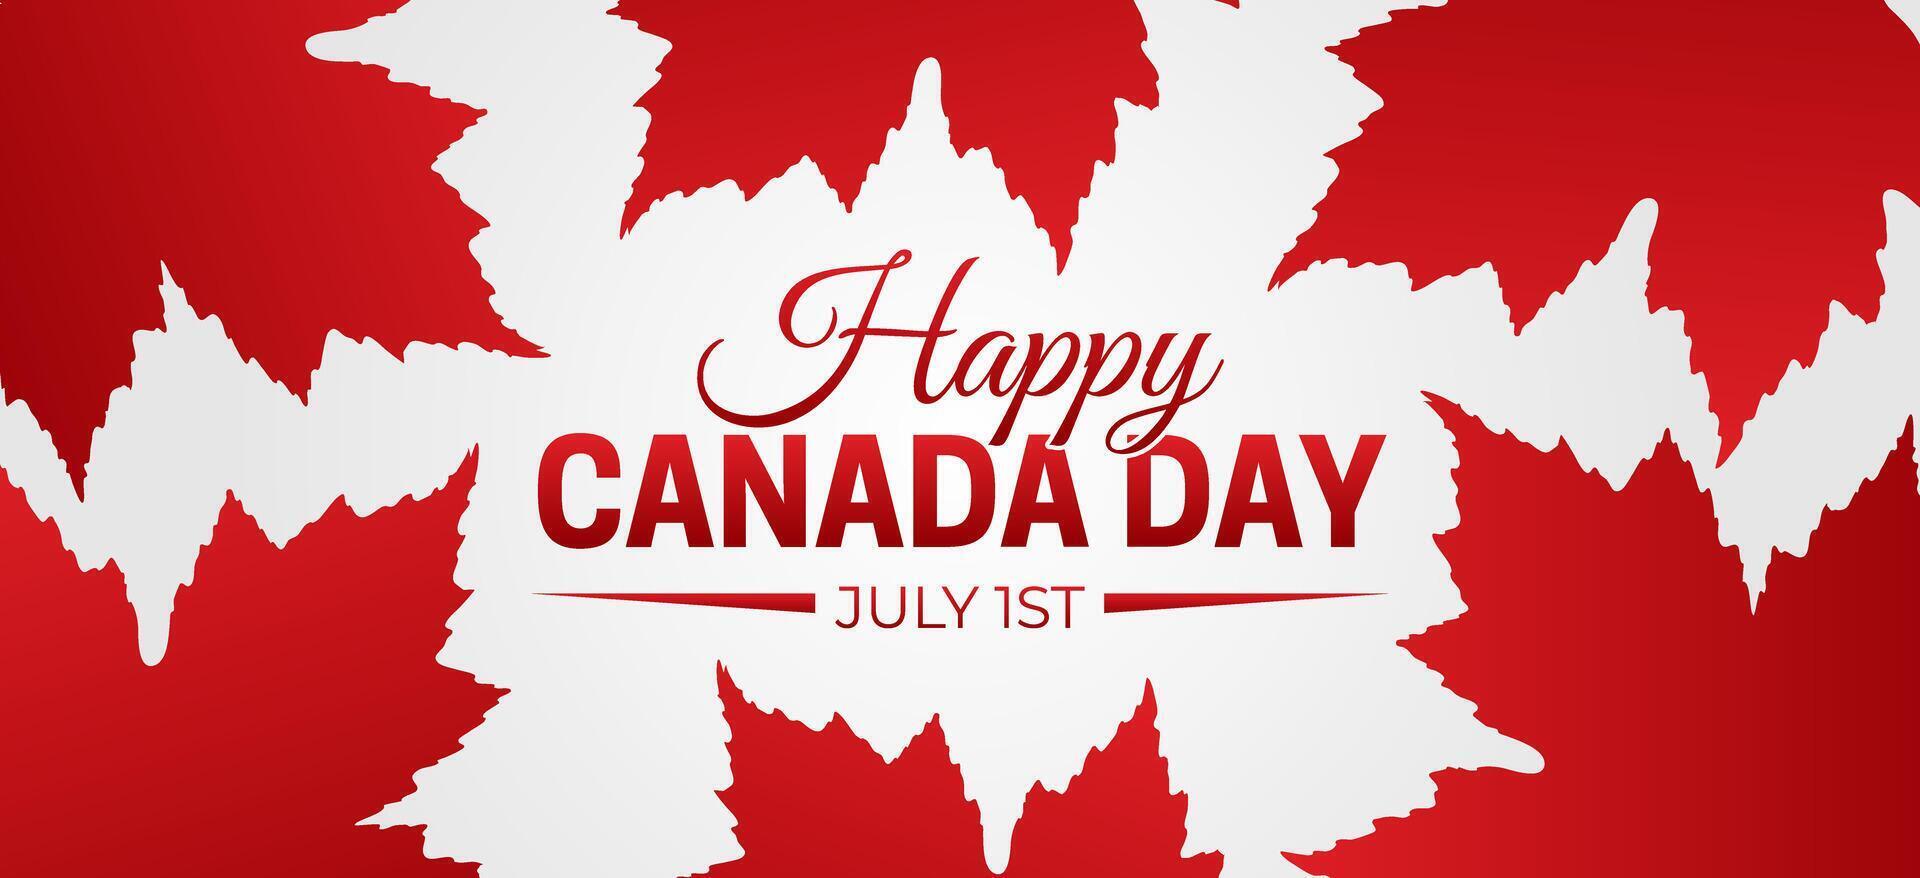 gelukkig Canada dag illustratie achtergrond banier vector